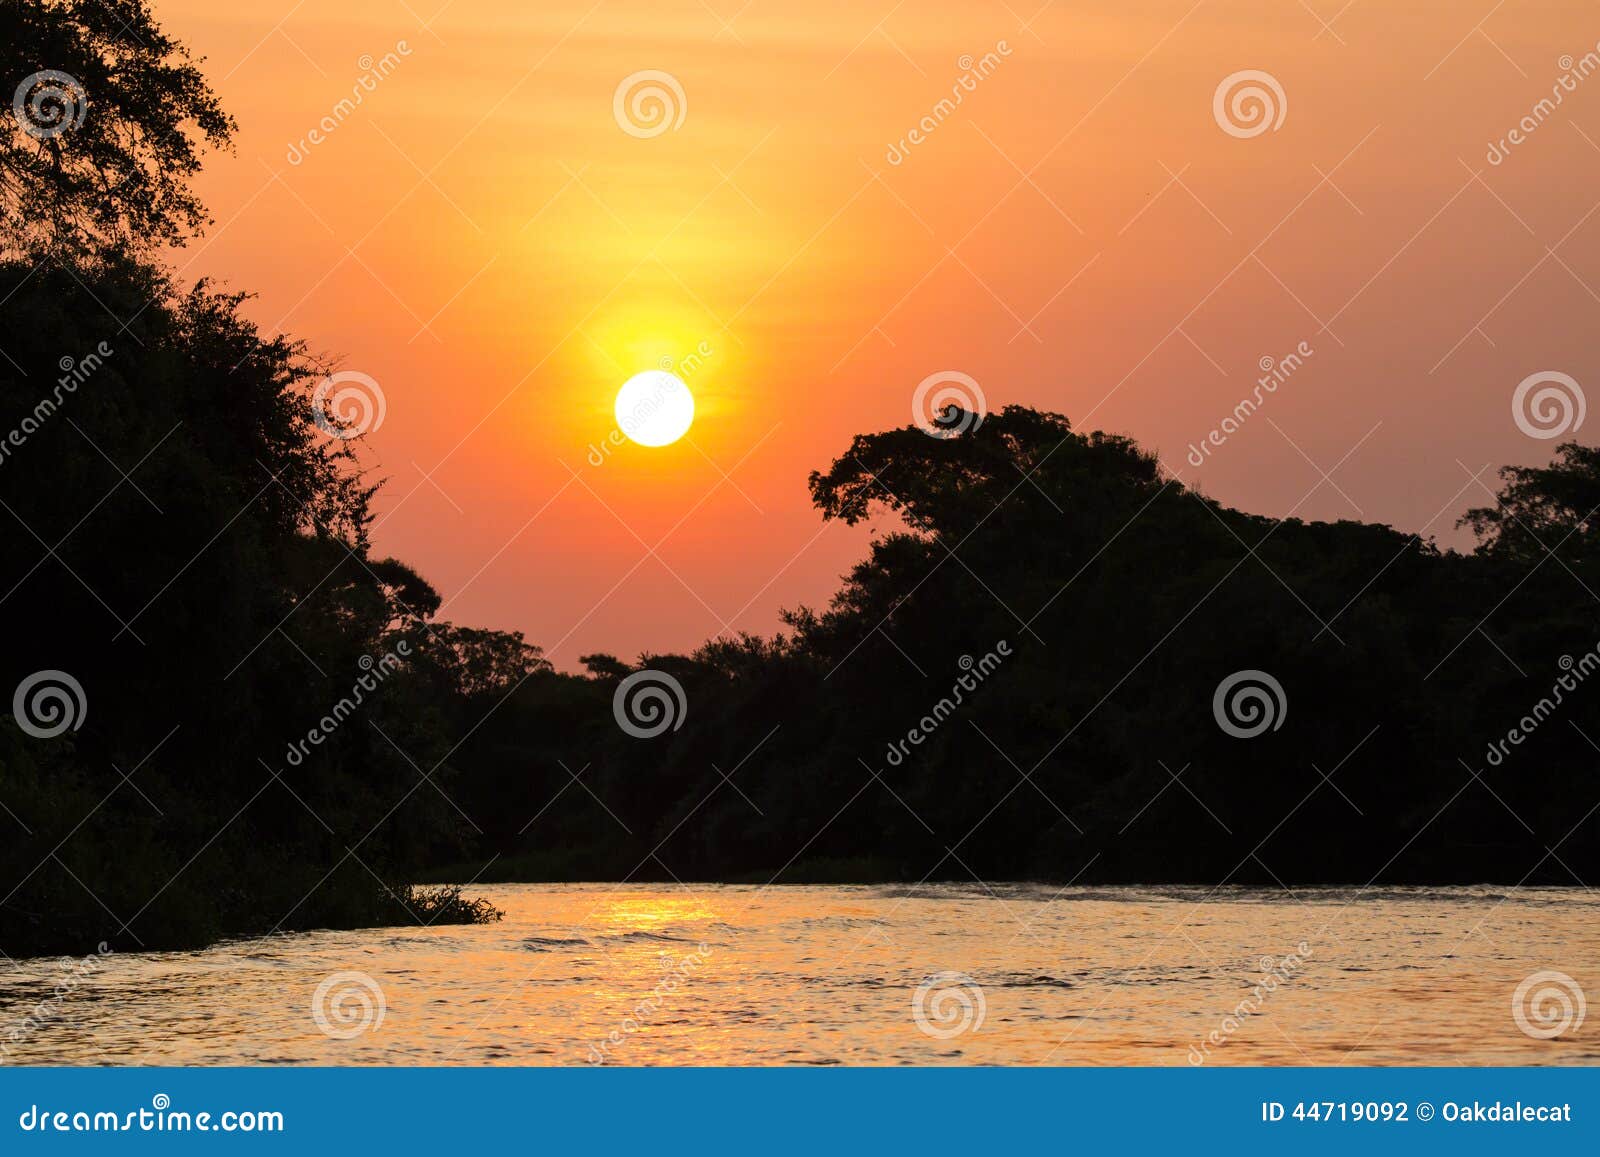 peach sunset over the brazilian pantanal and cuiaba river